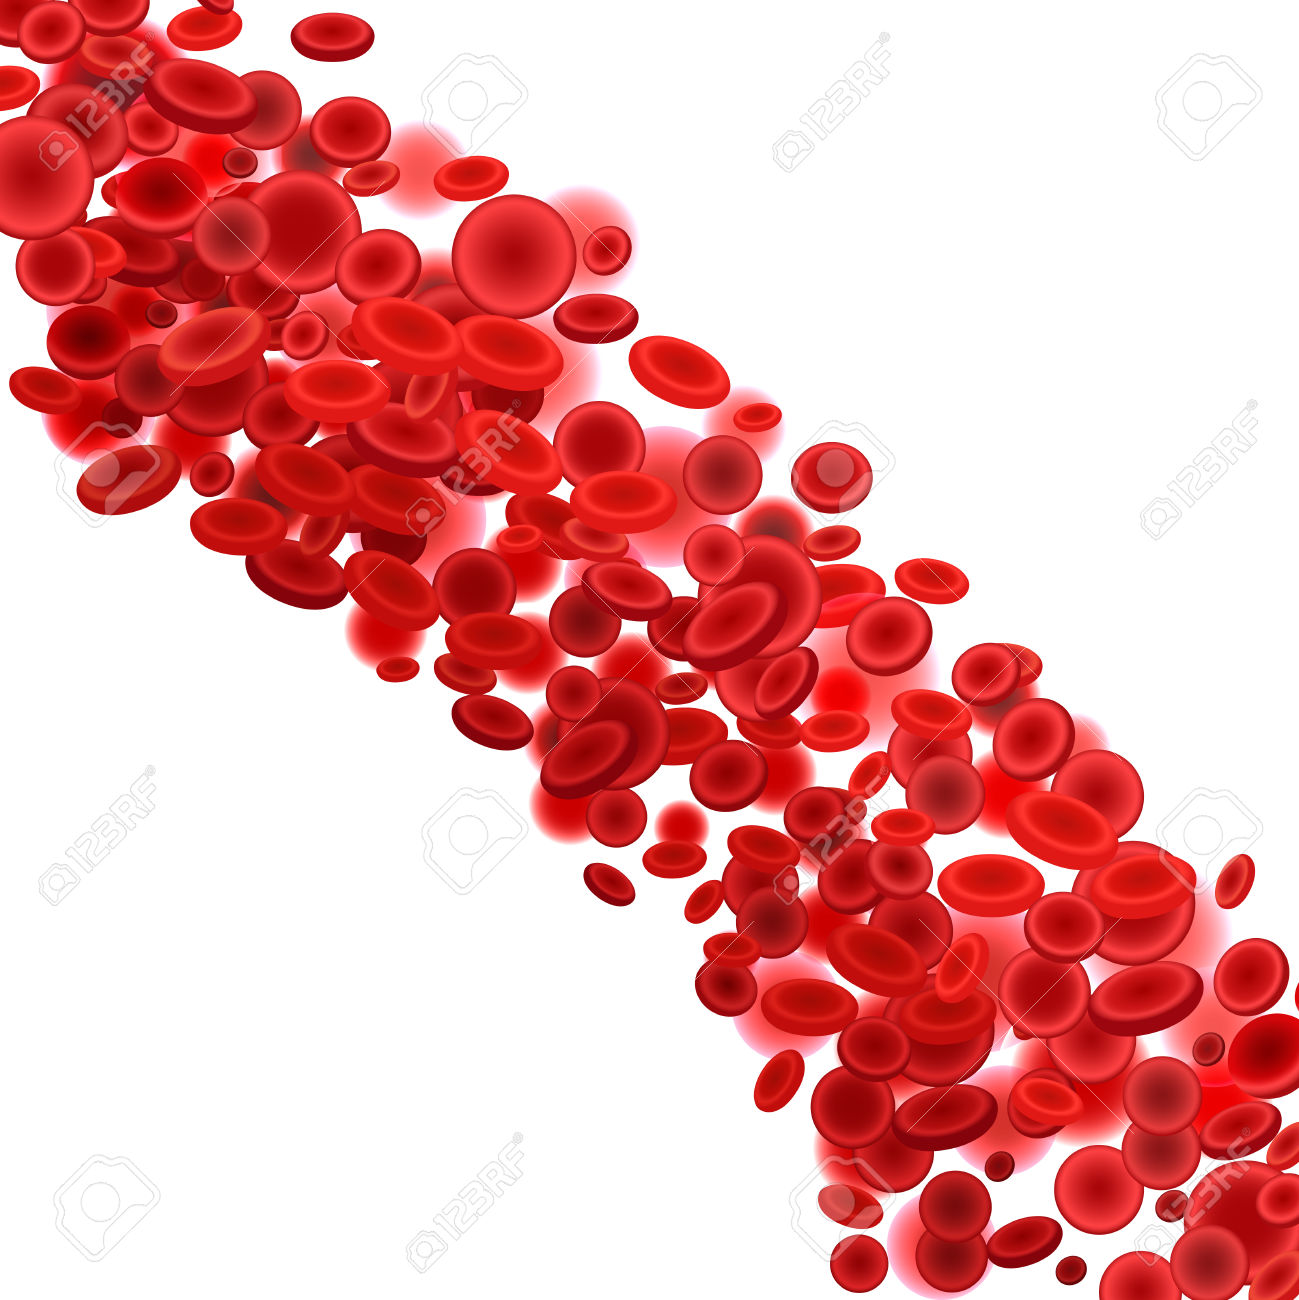 clipart blood cells - photo #45